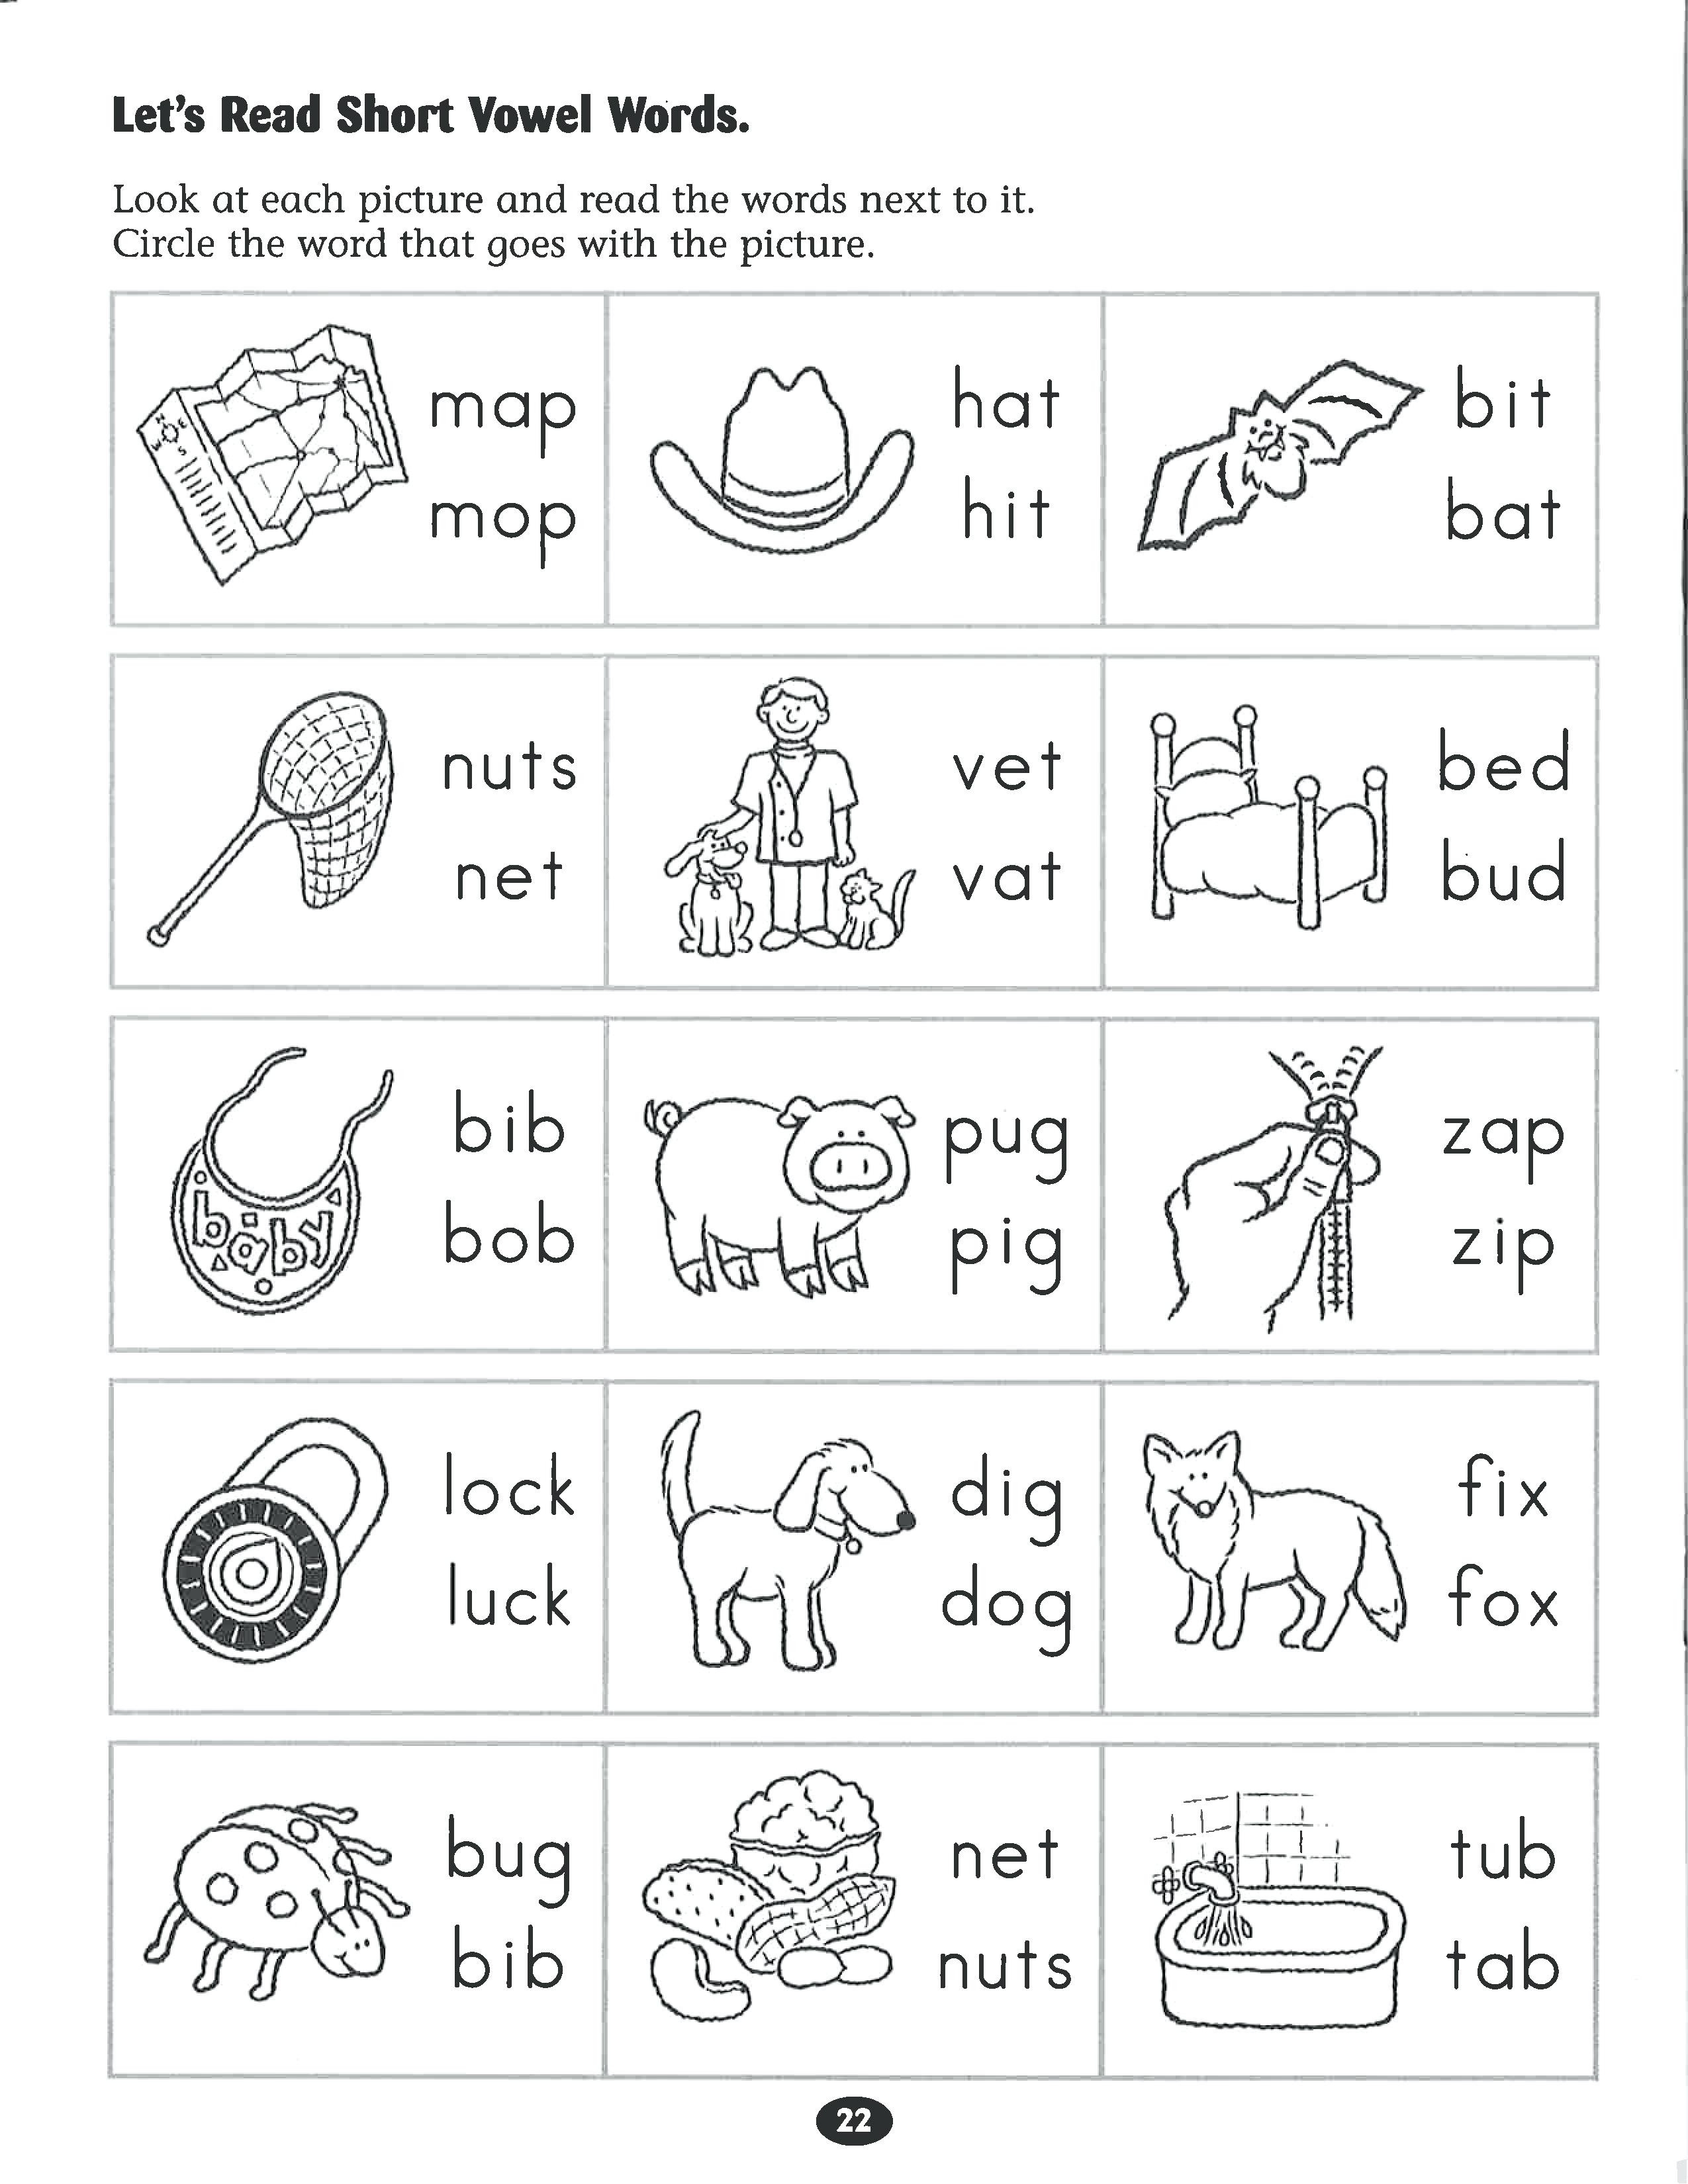 jolly-phonics-worksheets-for-preschoolers-printable-worksheets-for-kids